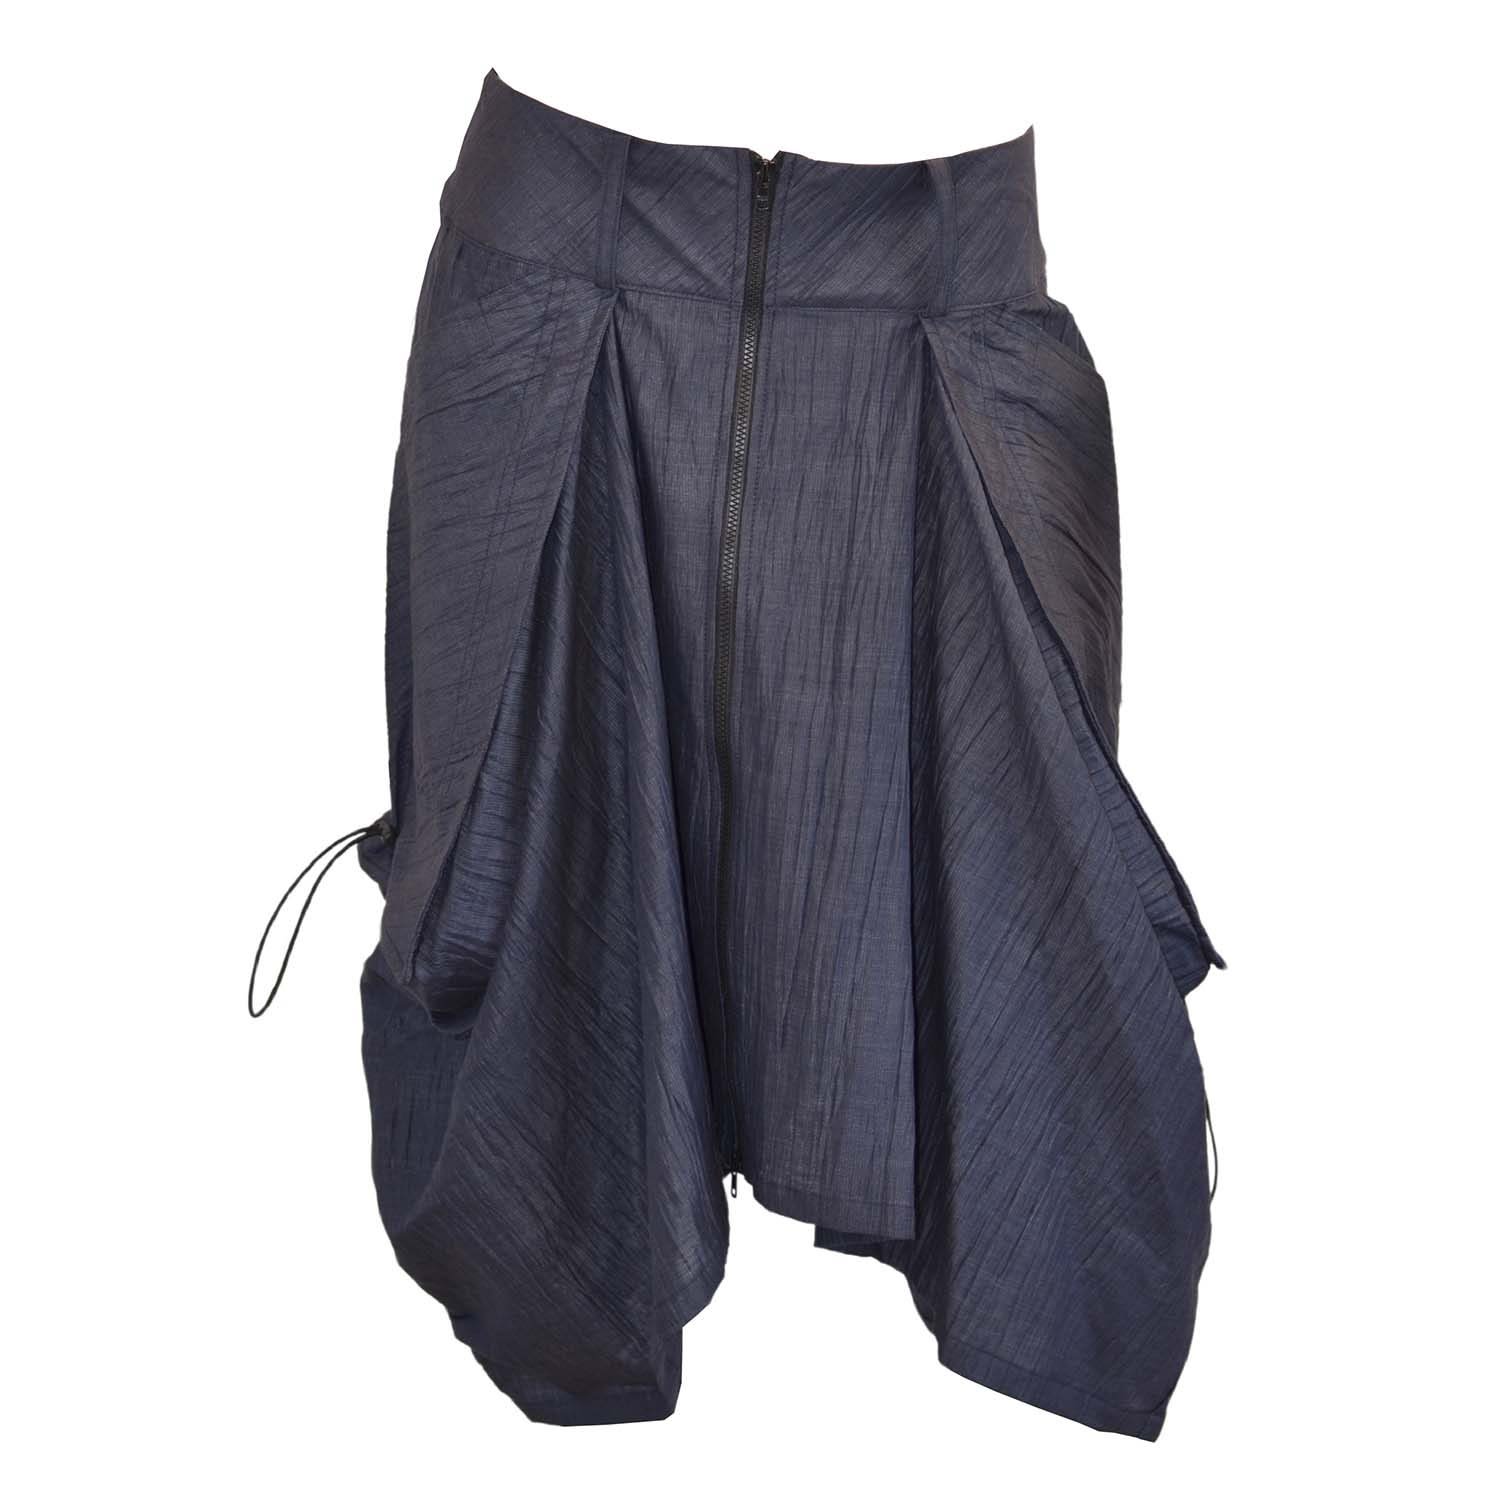 Snider Women's Blue Flax Skirt